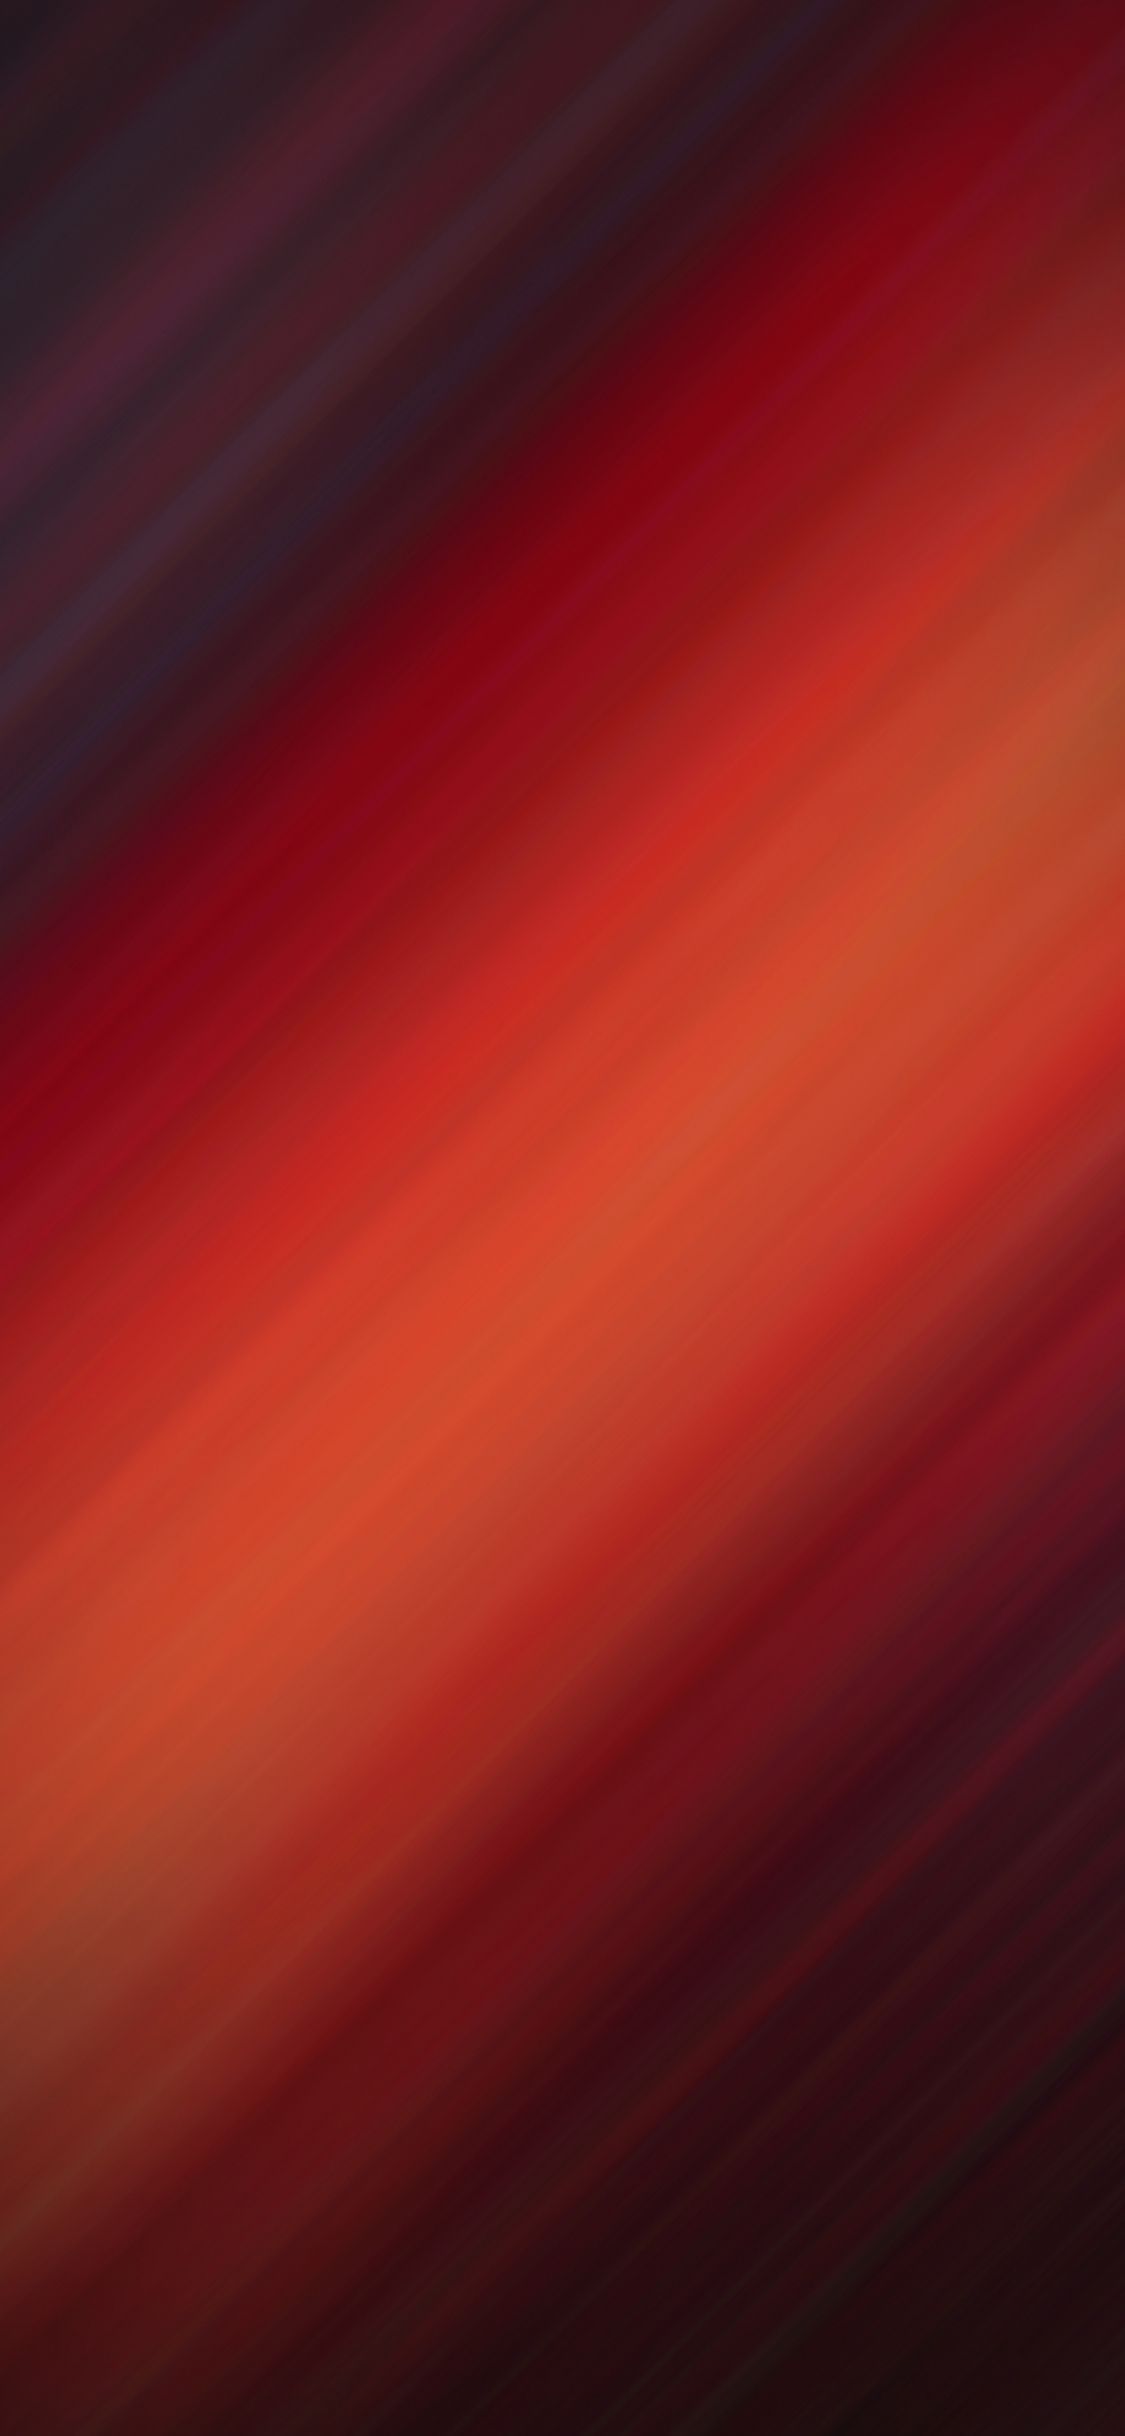 Download 1125x2436 Wallpaper Gradient, Stripes, Dark Red, Blur, Iphone X 1125x2436 HD Image, Background, 22080